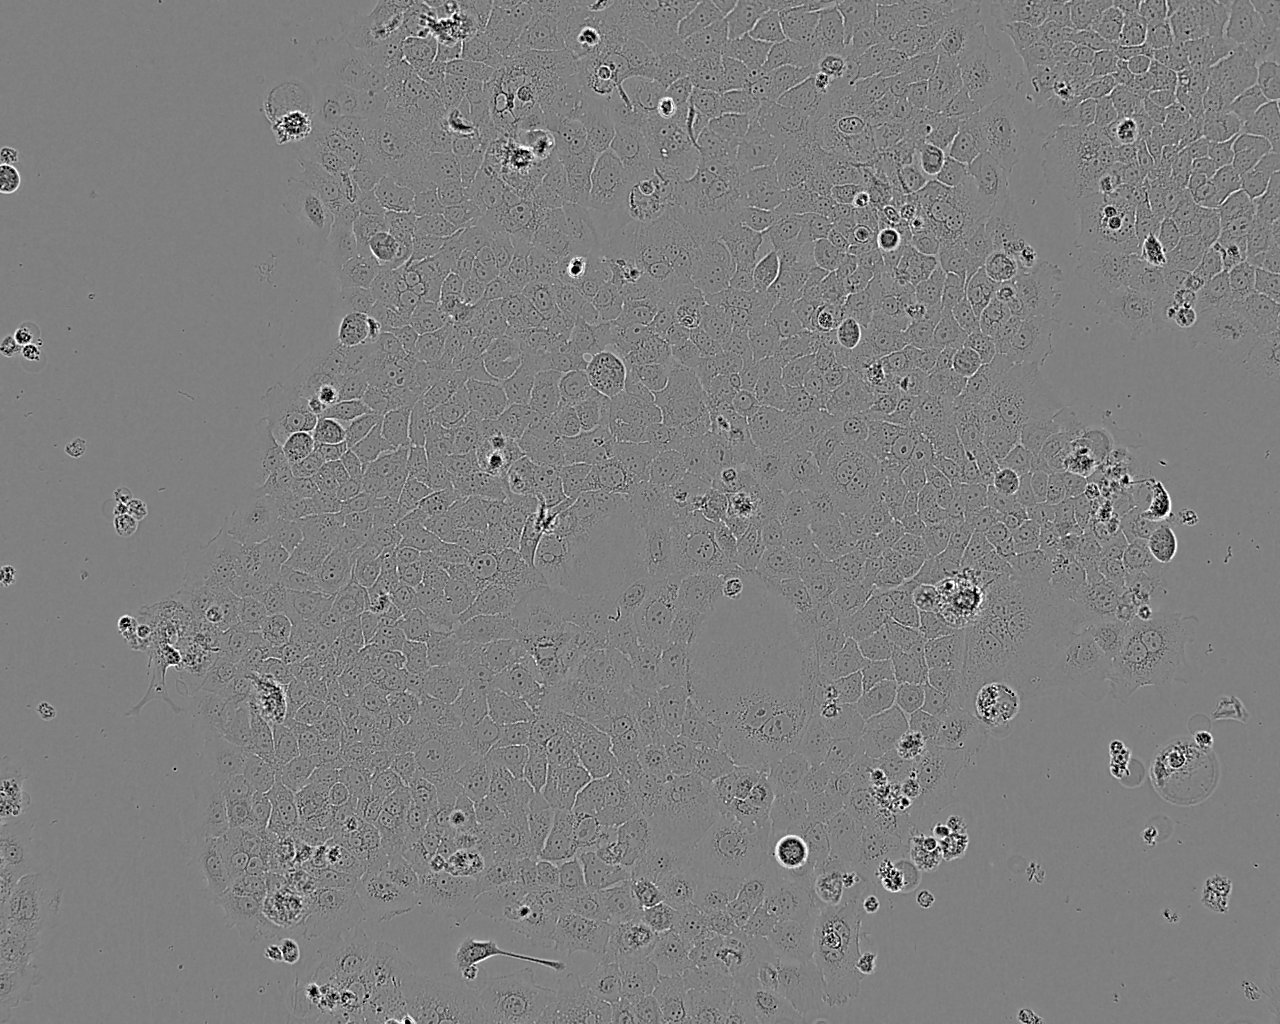 A-875 Adherent人黑色素瘤细胞系